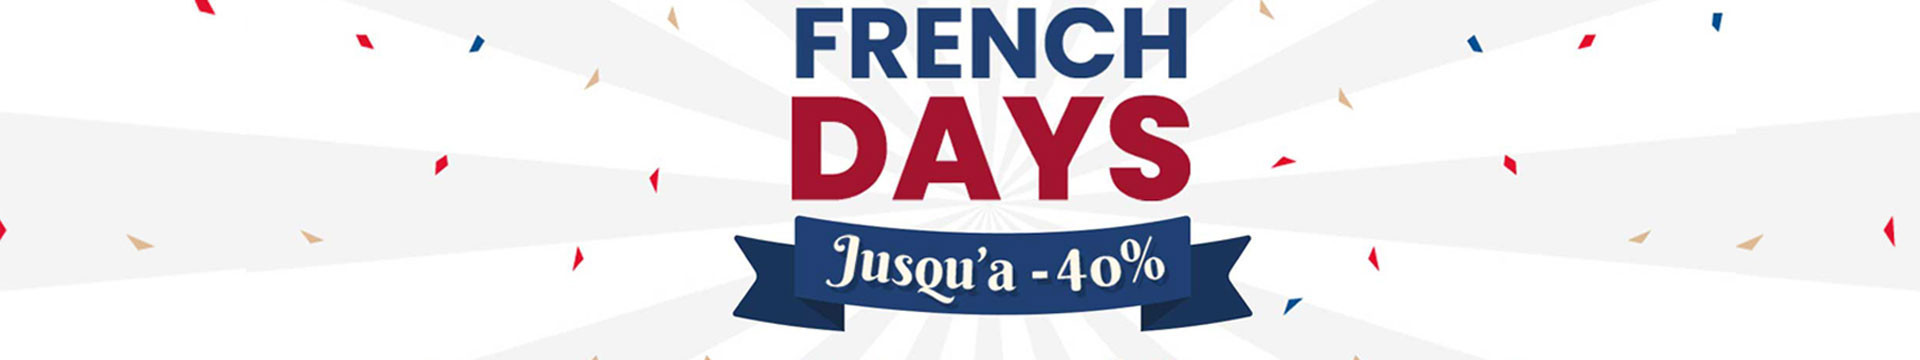 French Days -15%